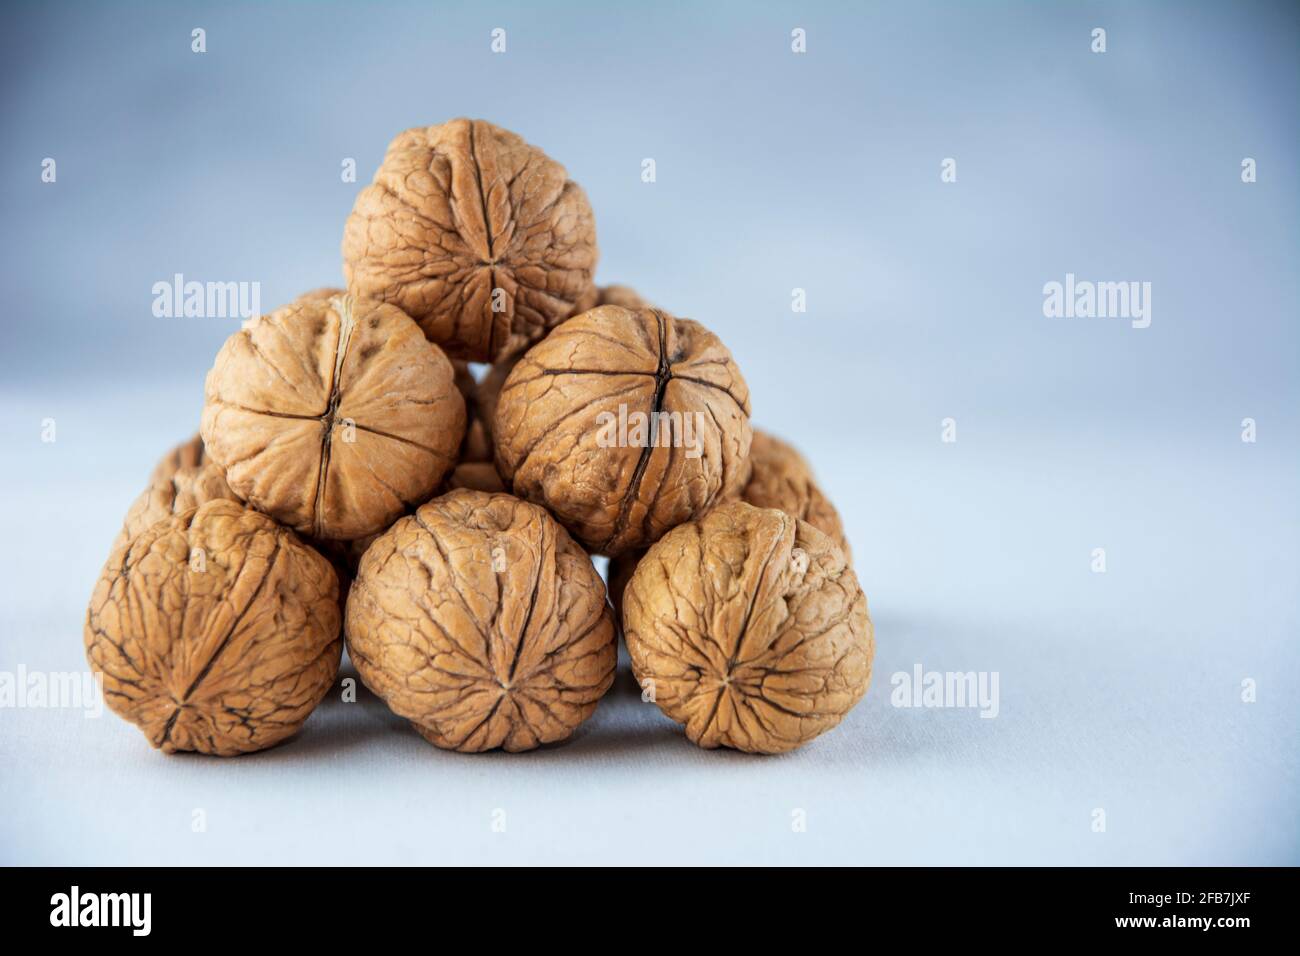 Pile of walnuts on white isolated background Stock Photo